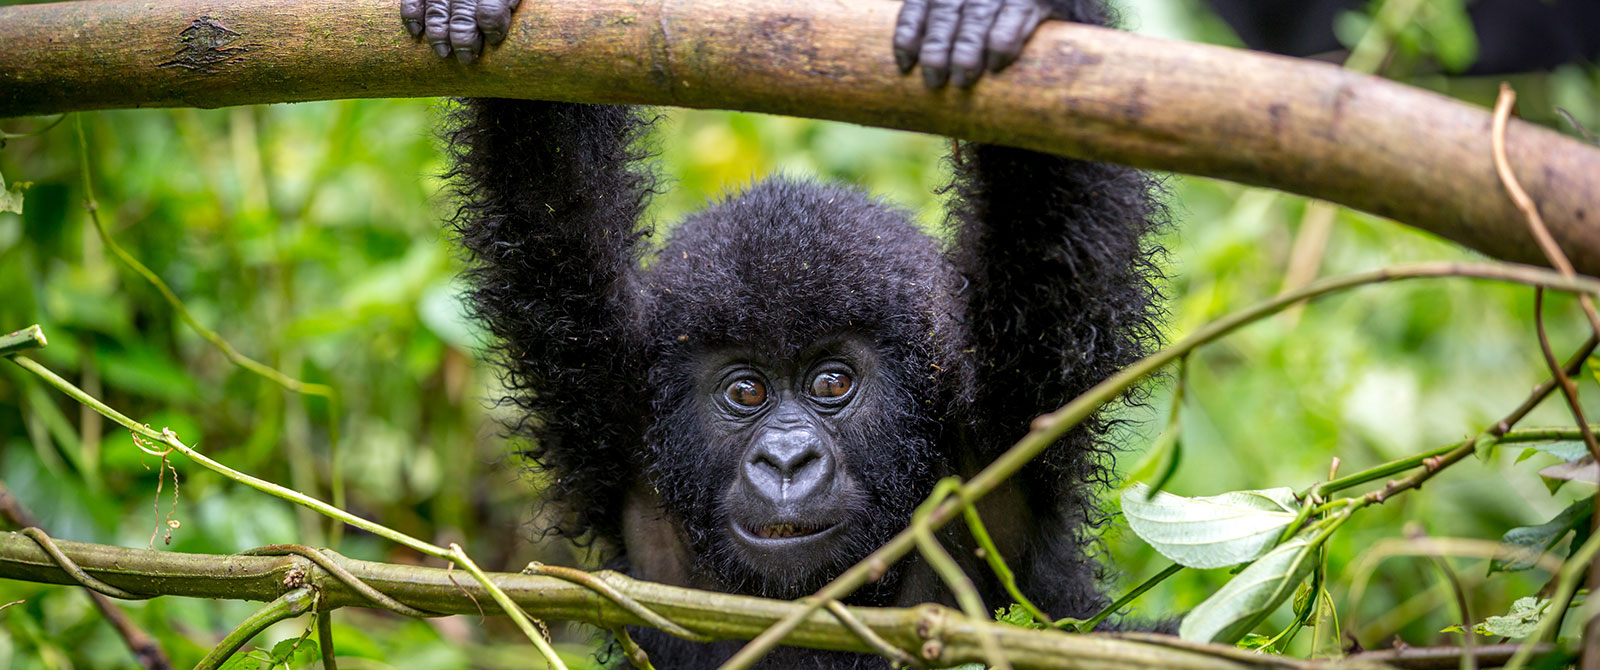 Baby Gorilla in the Rainforest - Uganda Gorilla Trekking Safari